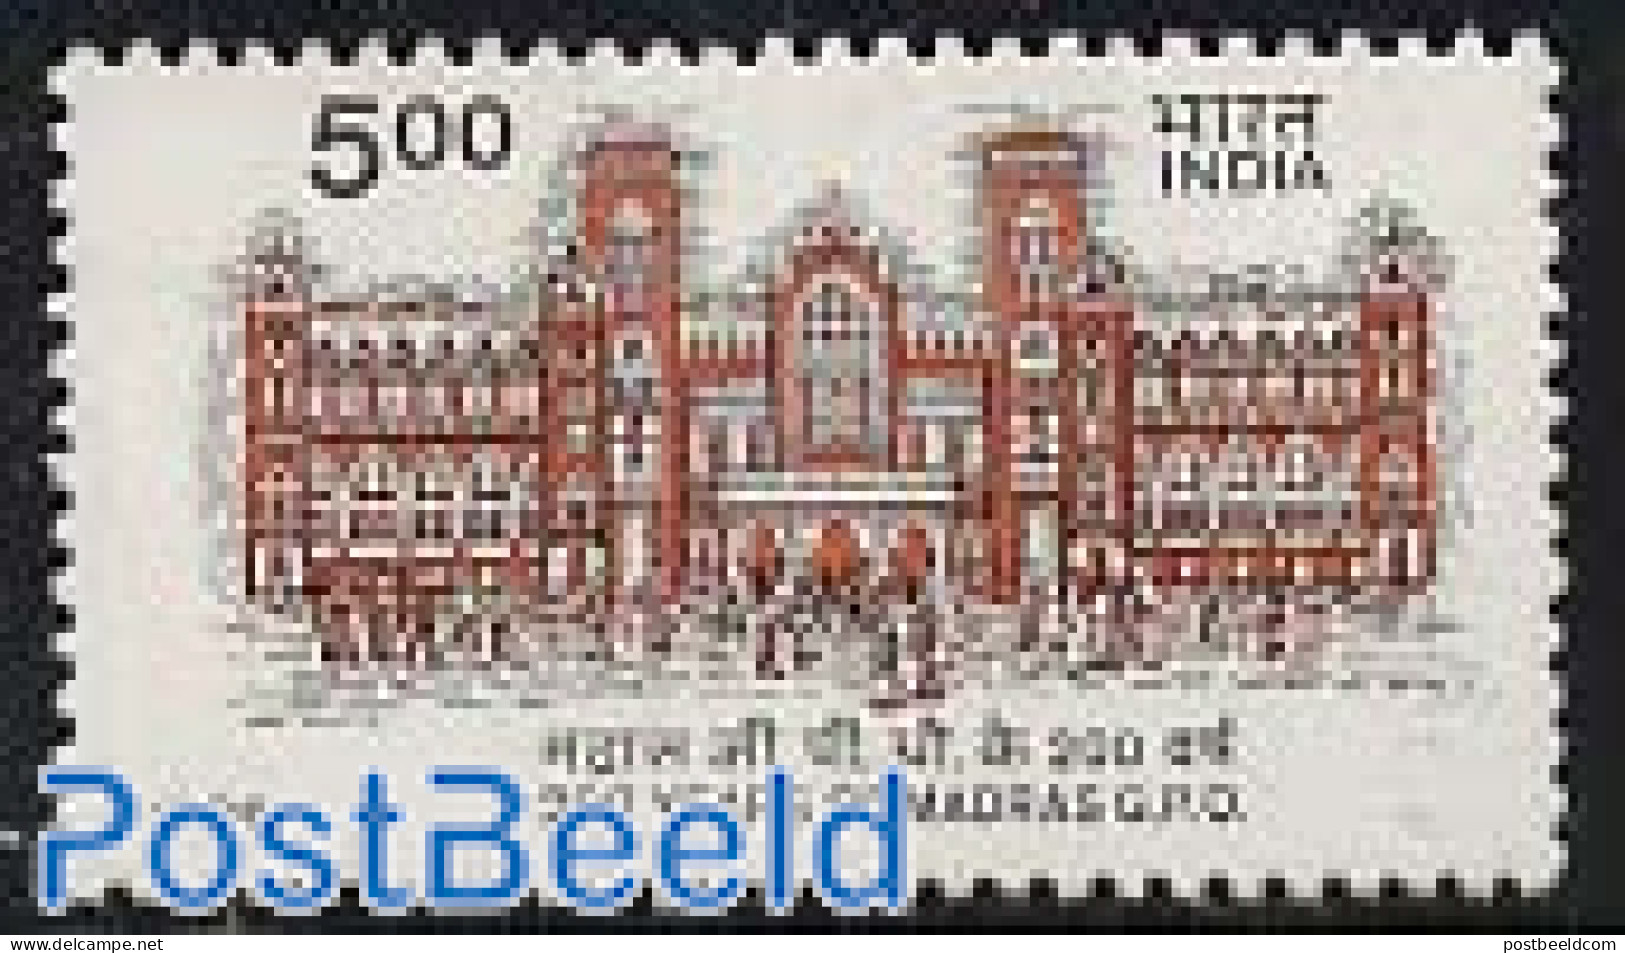 India 1986 Madras Post Office 1v, Mint NH, Post - Neufs